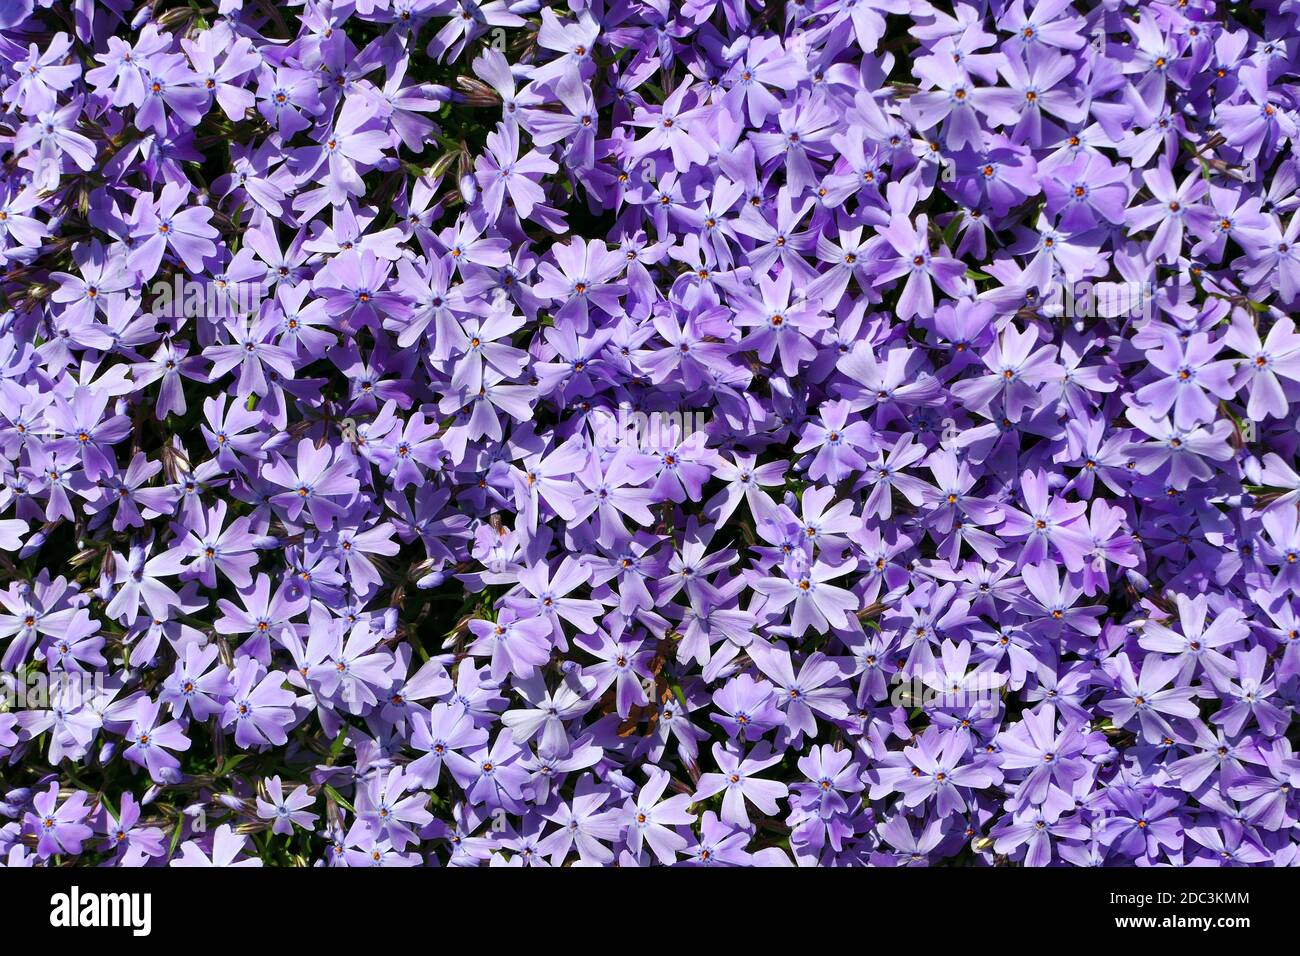 Background of bright purple Phlox flowers. Stock Photo